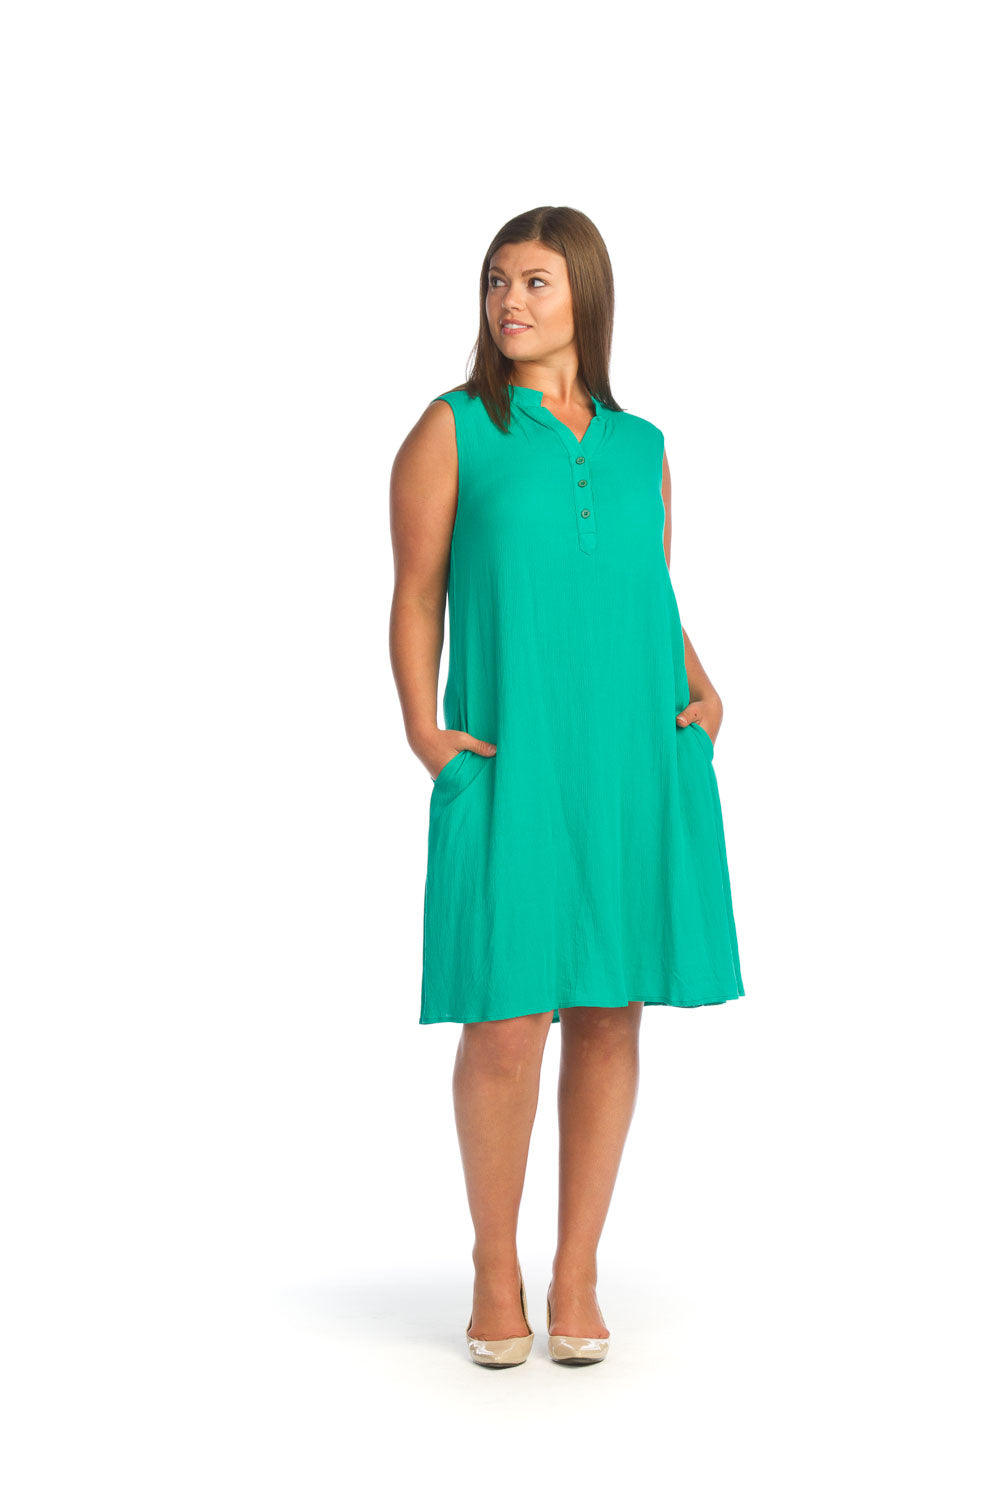 SALE Papillon PD14596 Green Henley Dress with Pockets